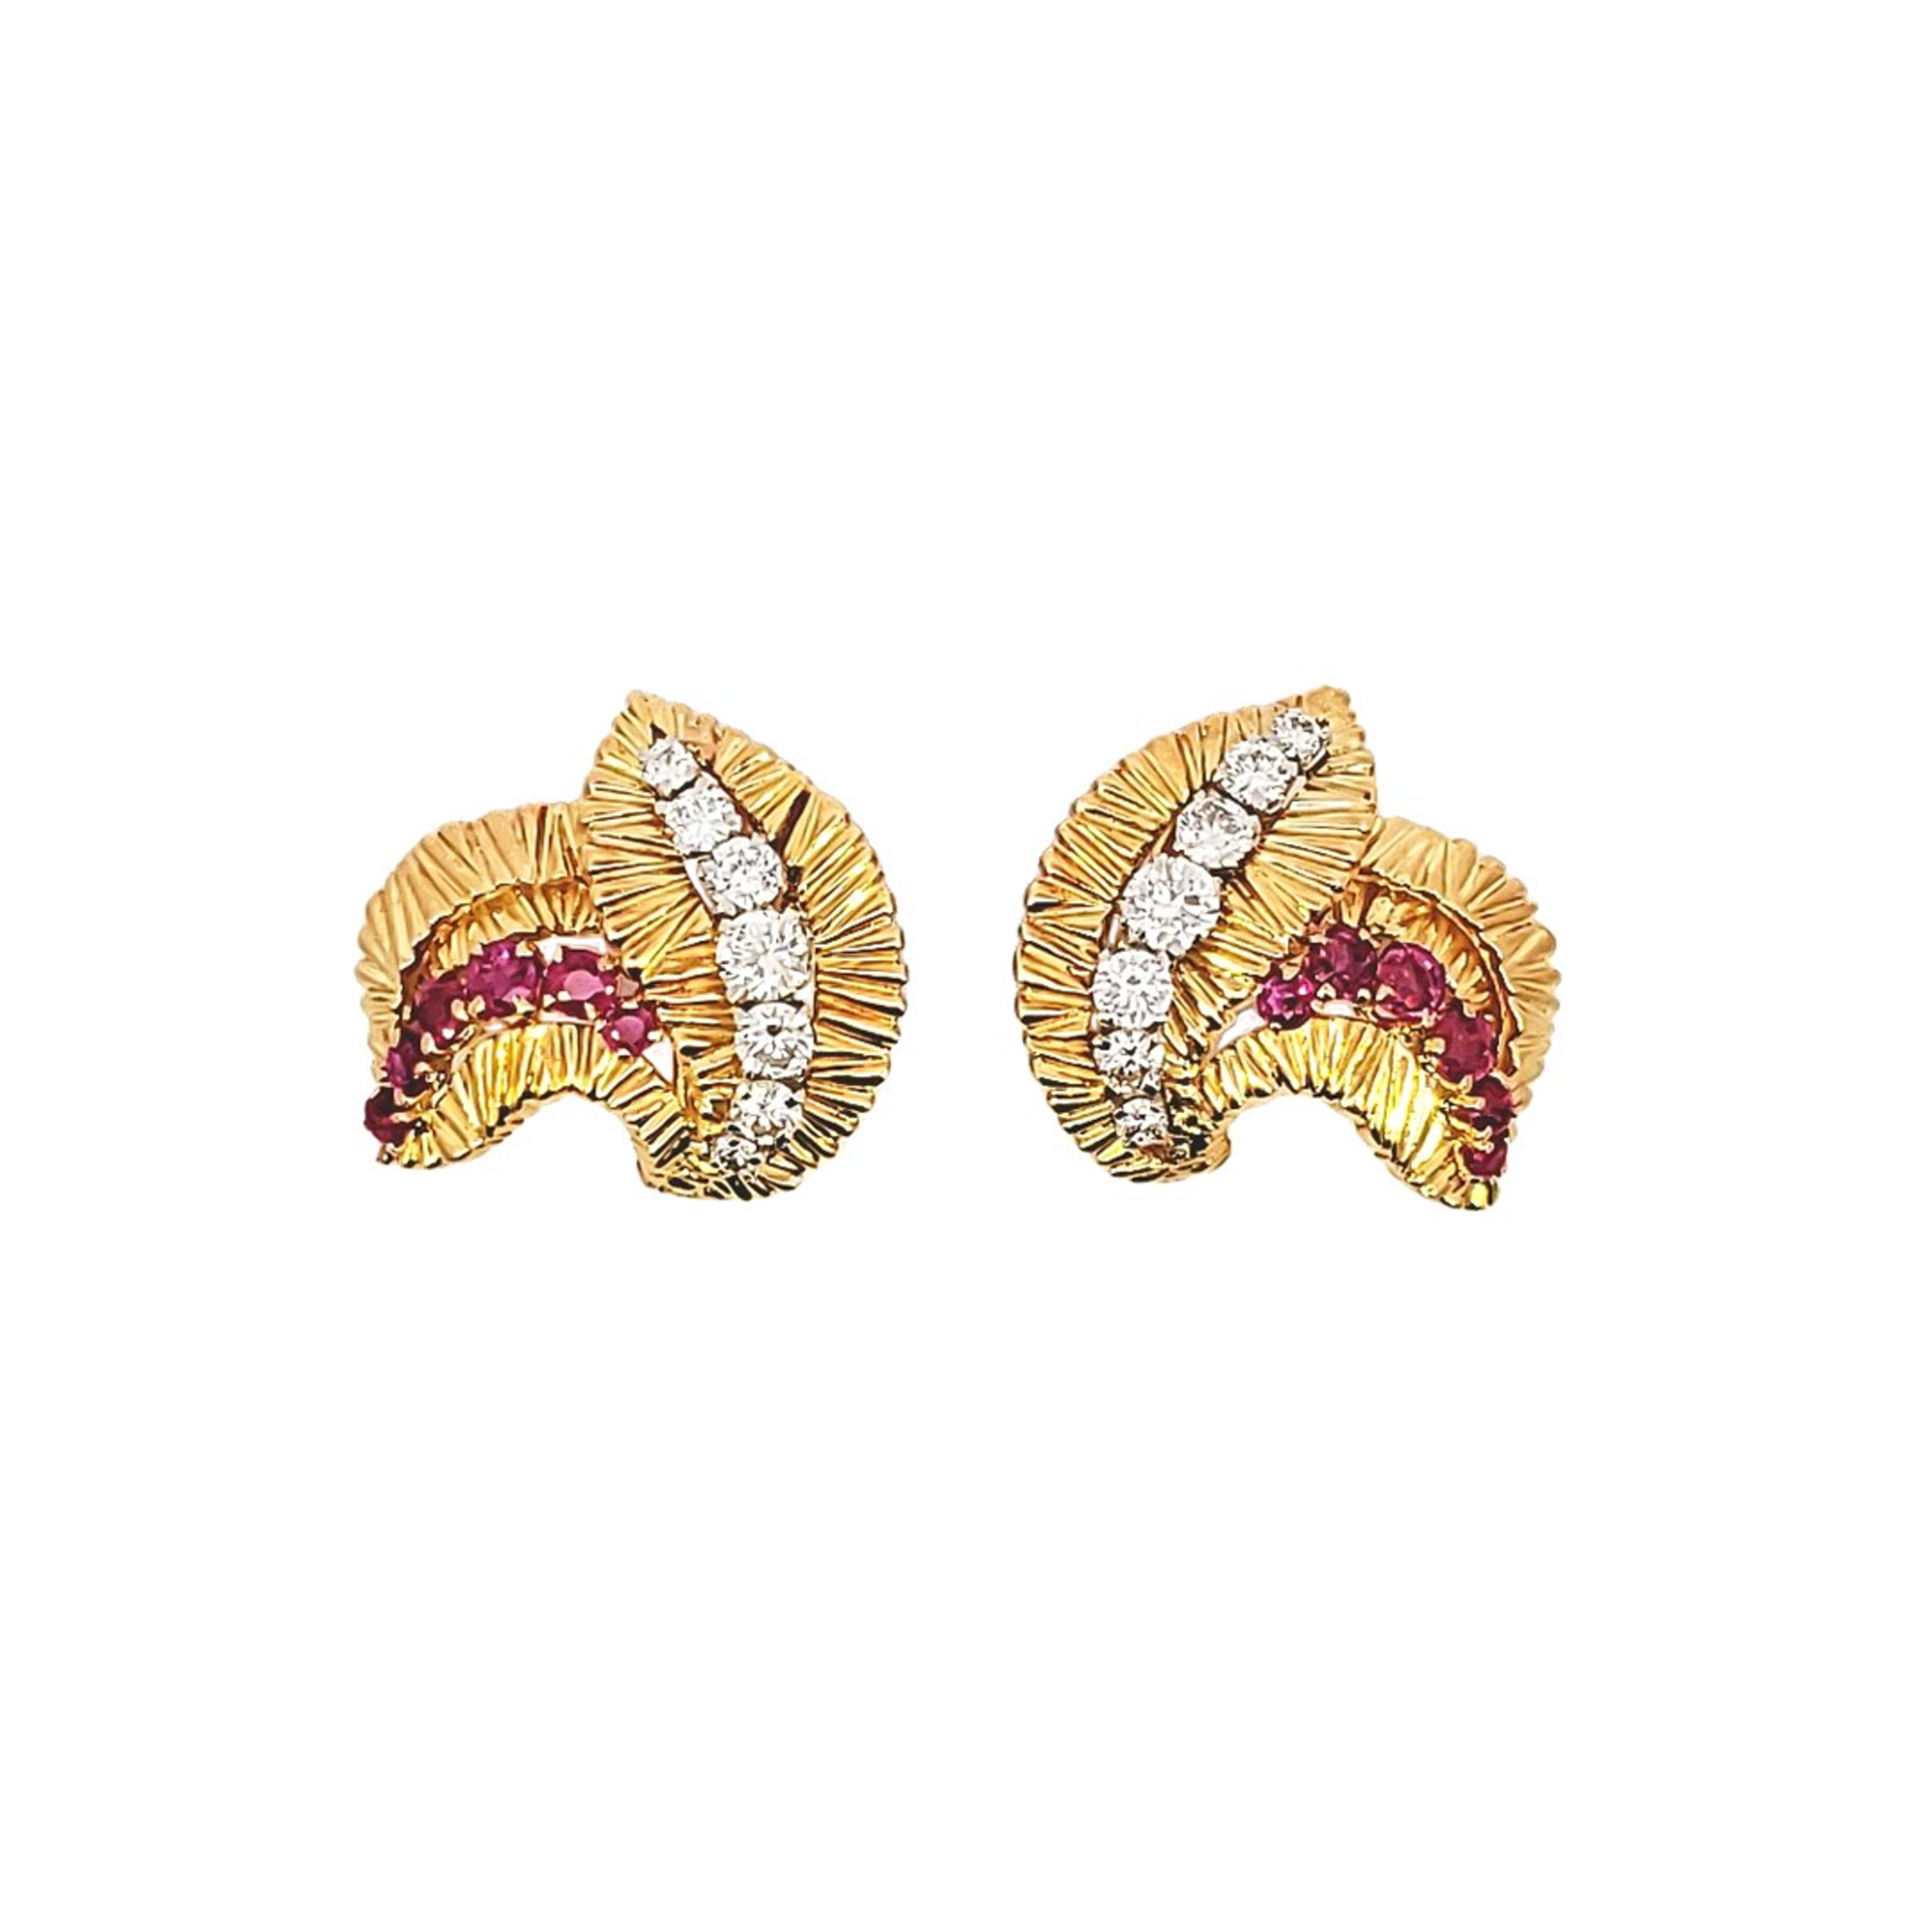 1950s 18KT Yellow Gold Ruby & Diamond Earrings front